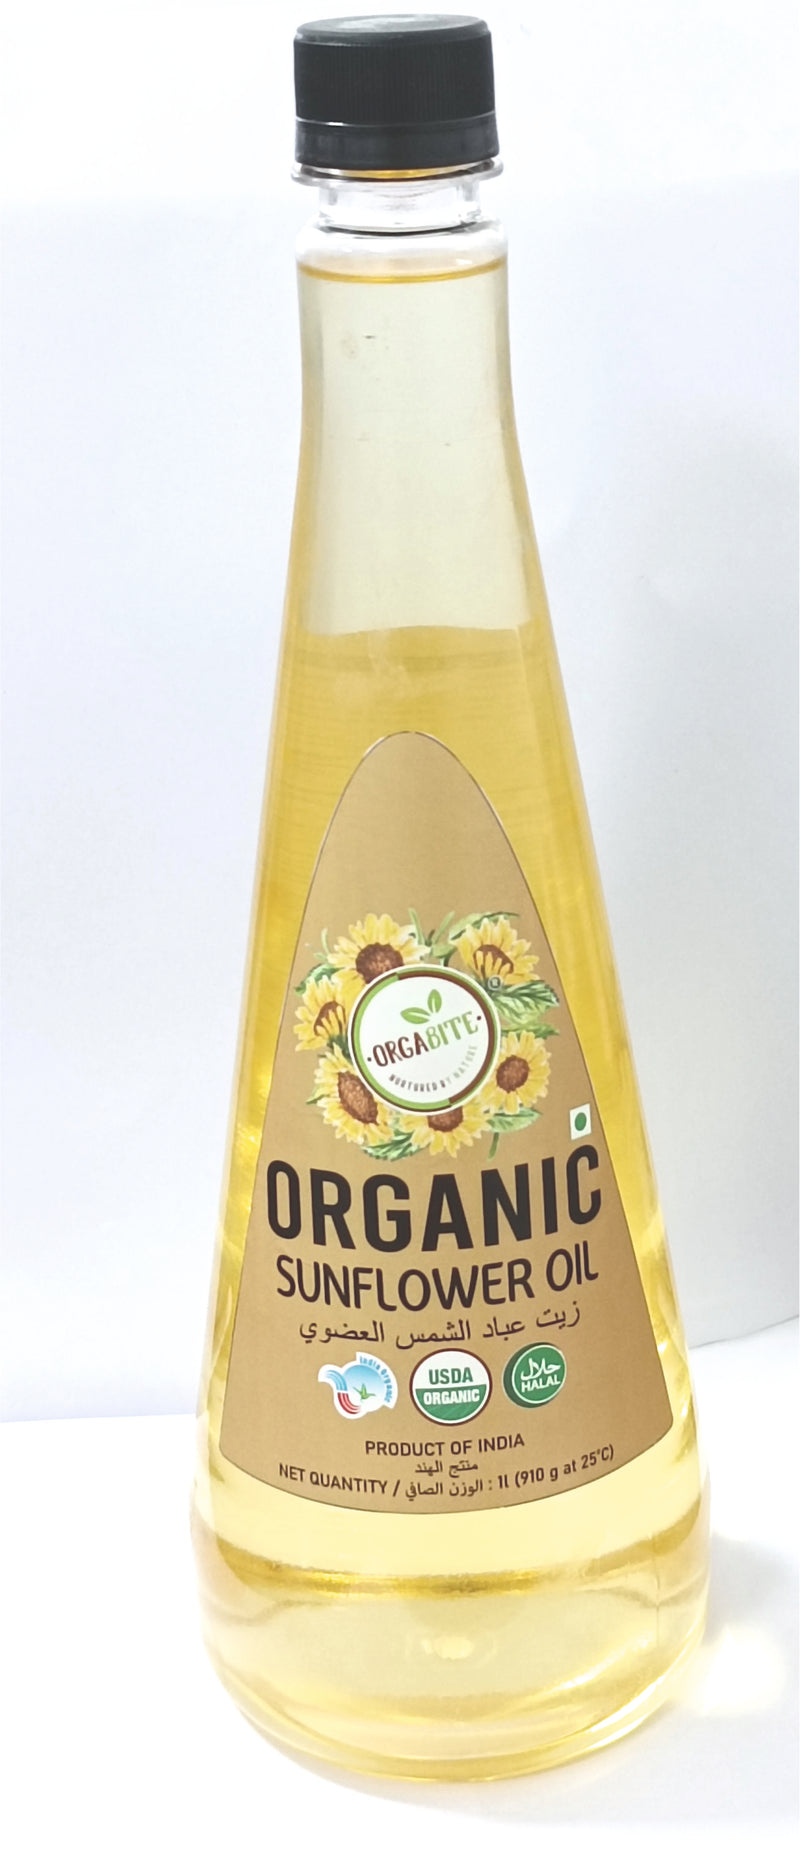 Organic Sunflower oil